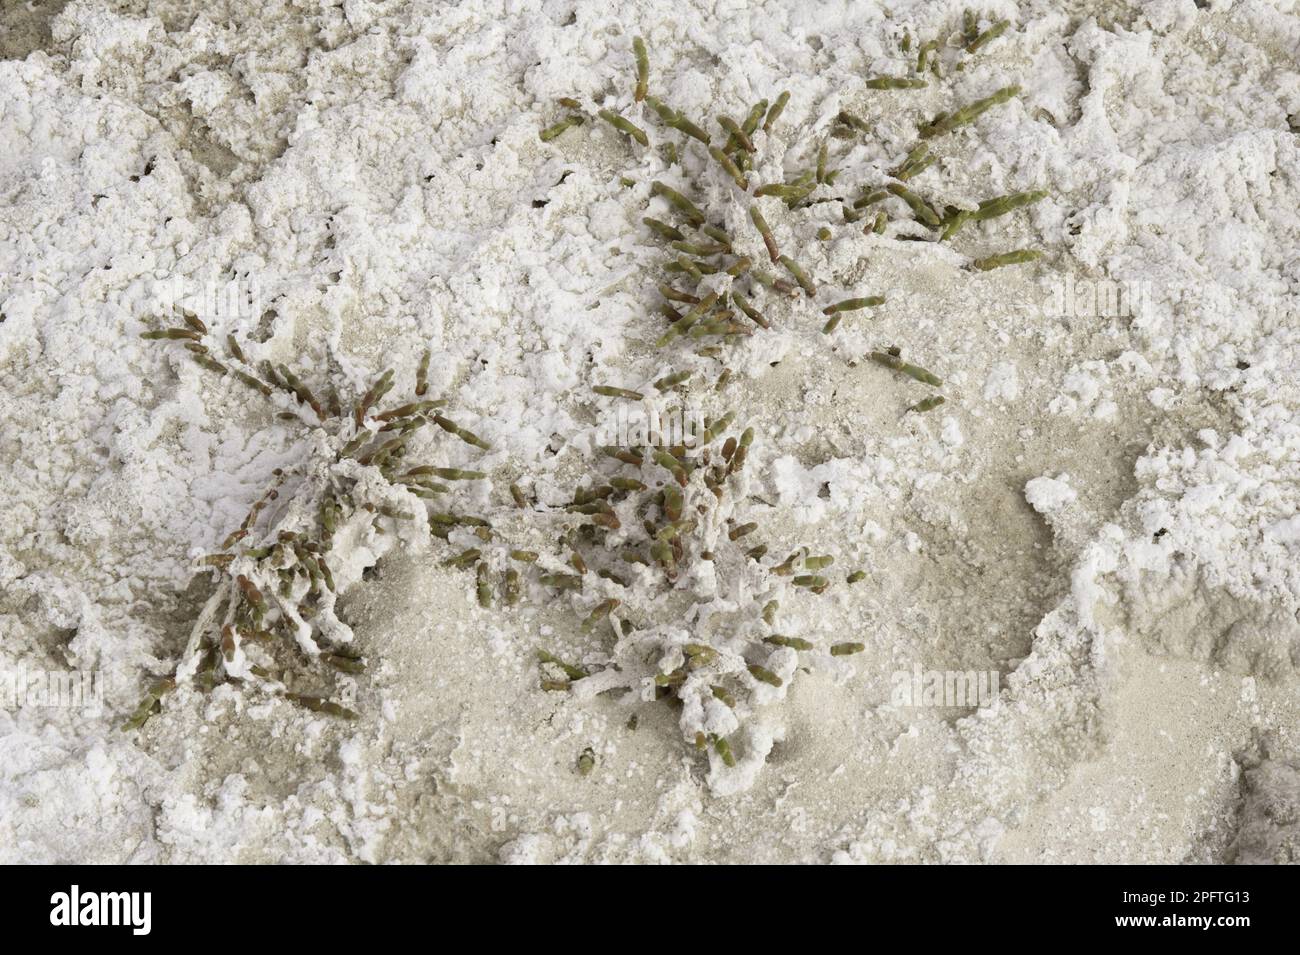 Perennial salt-encrusted glasswort (Sarcocornia perennis) growing on a salt pan, Santa Cruz Province, Patagonia, Argentina Stock Photo